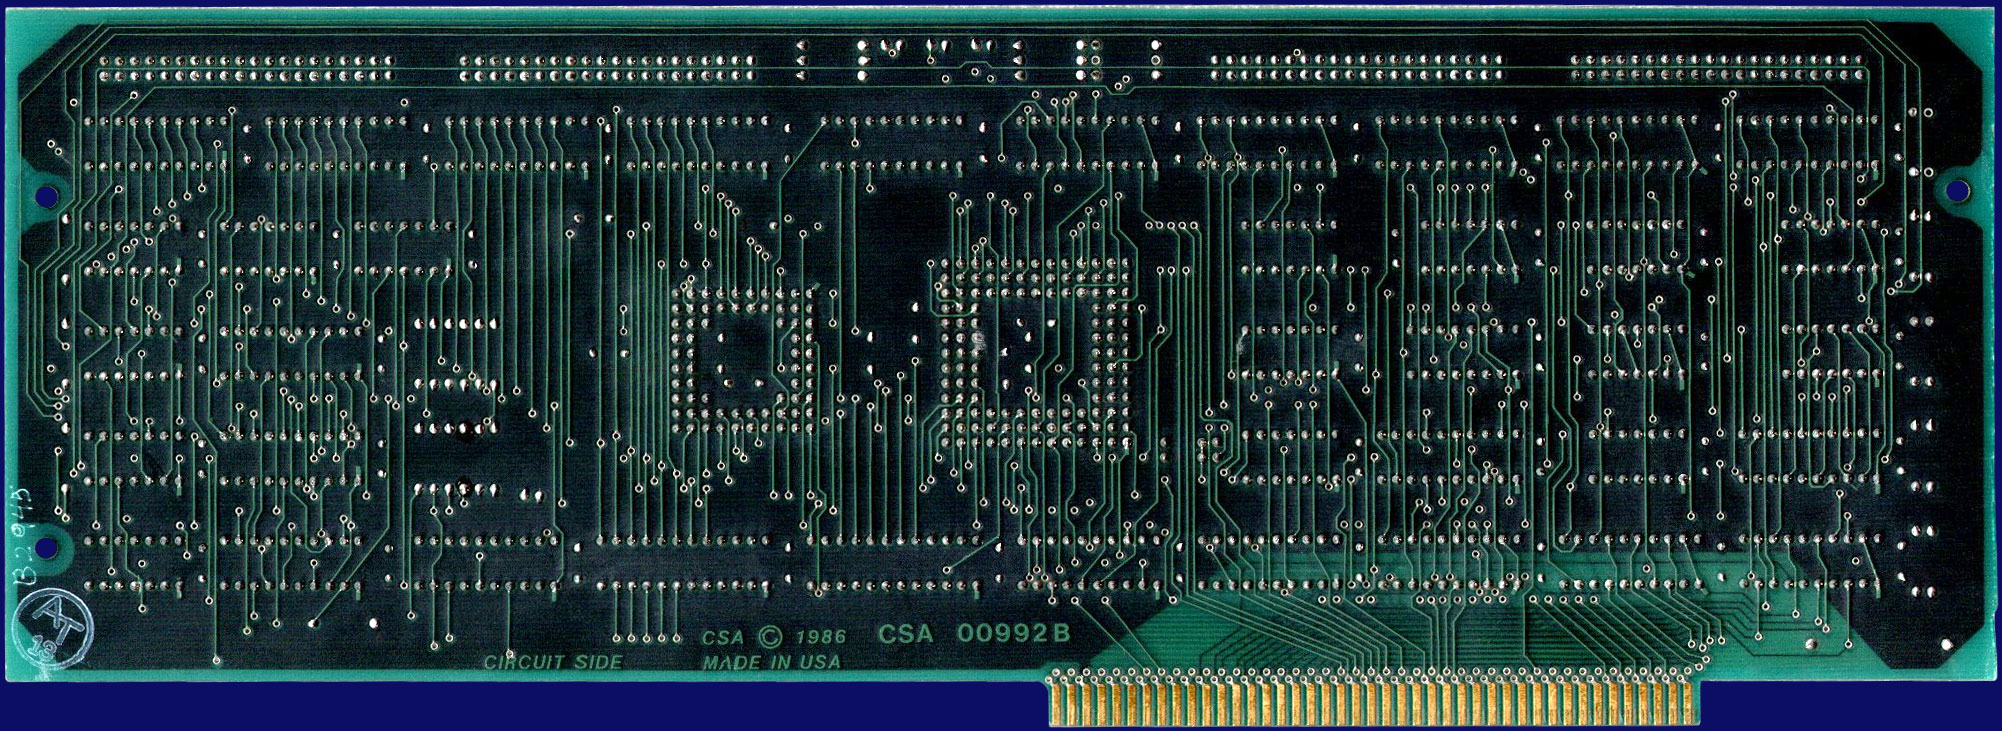 Computer System Associates Turbo Amiga CPU (A2000) - CPU card Rev B, back side